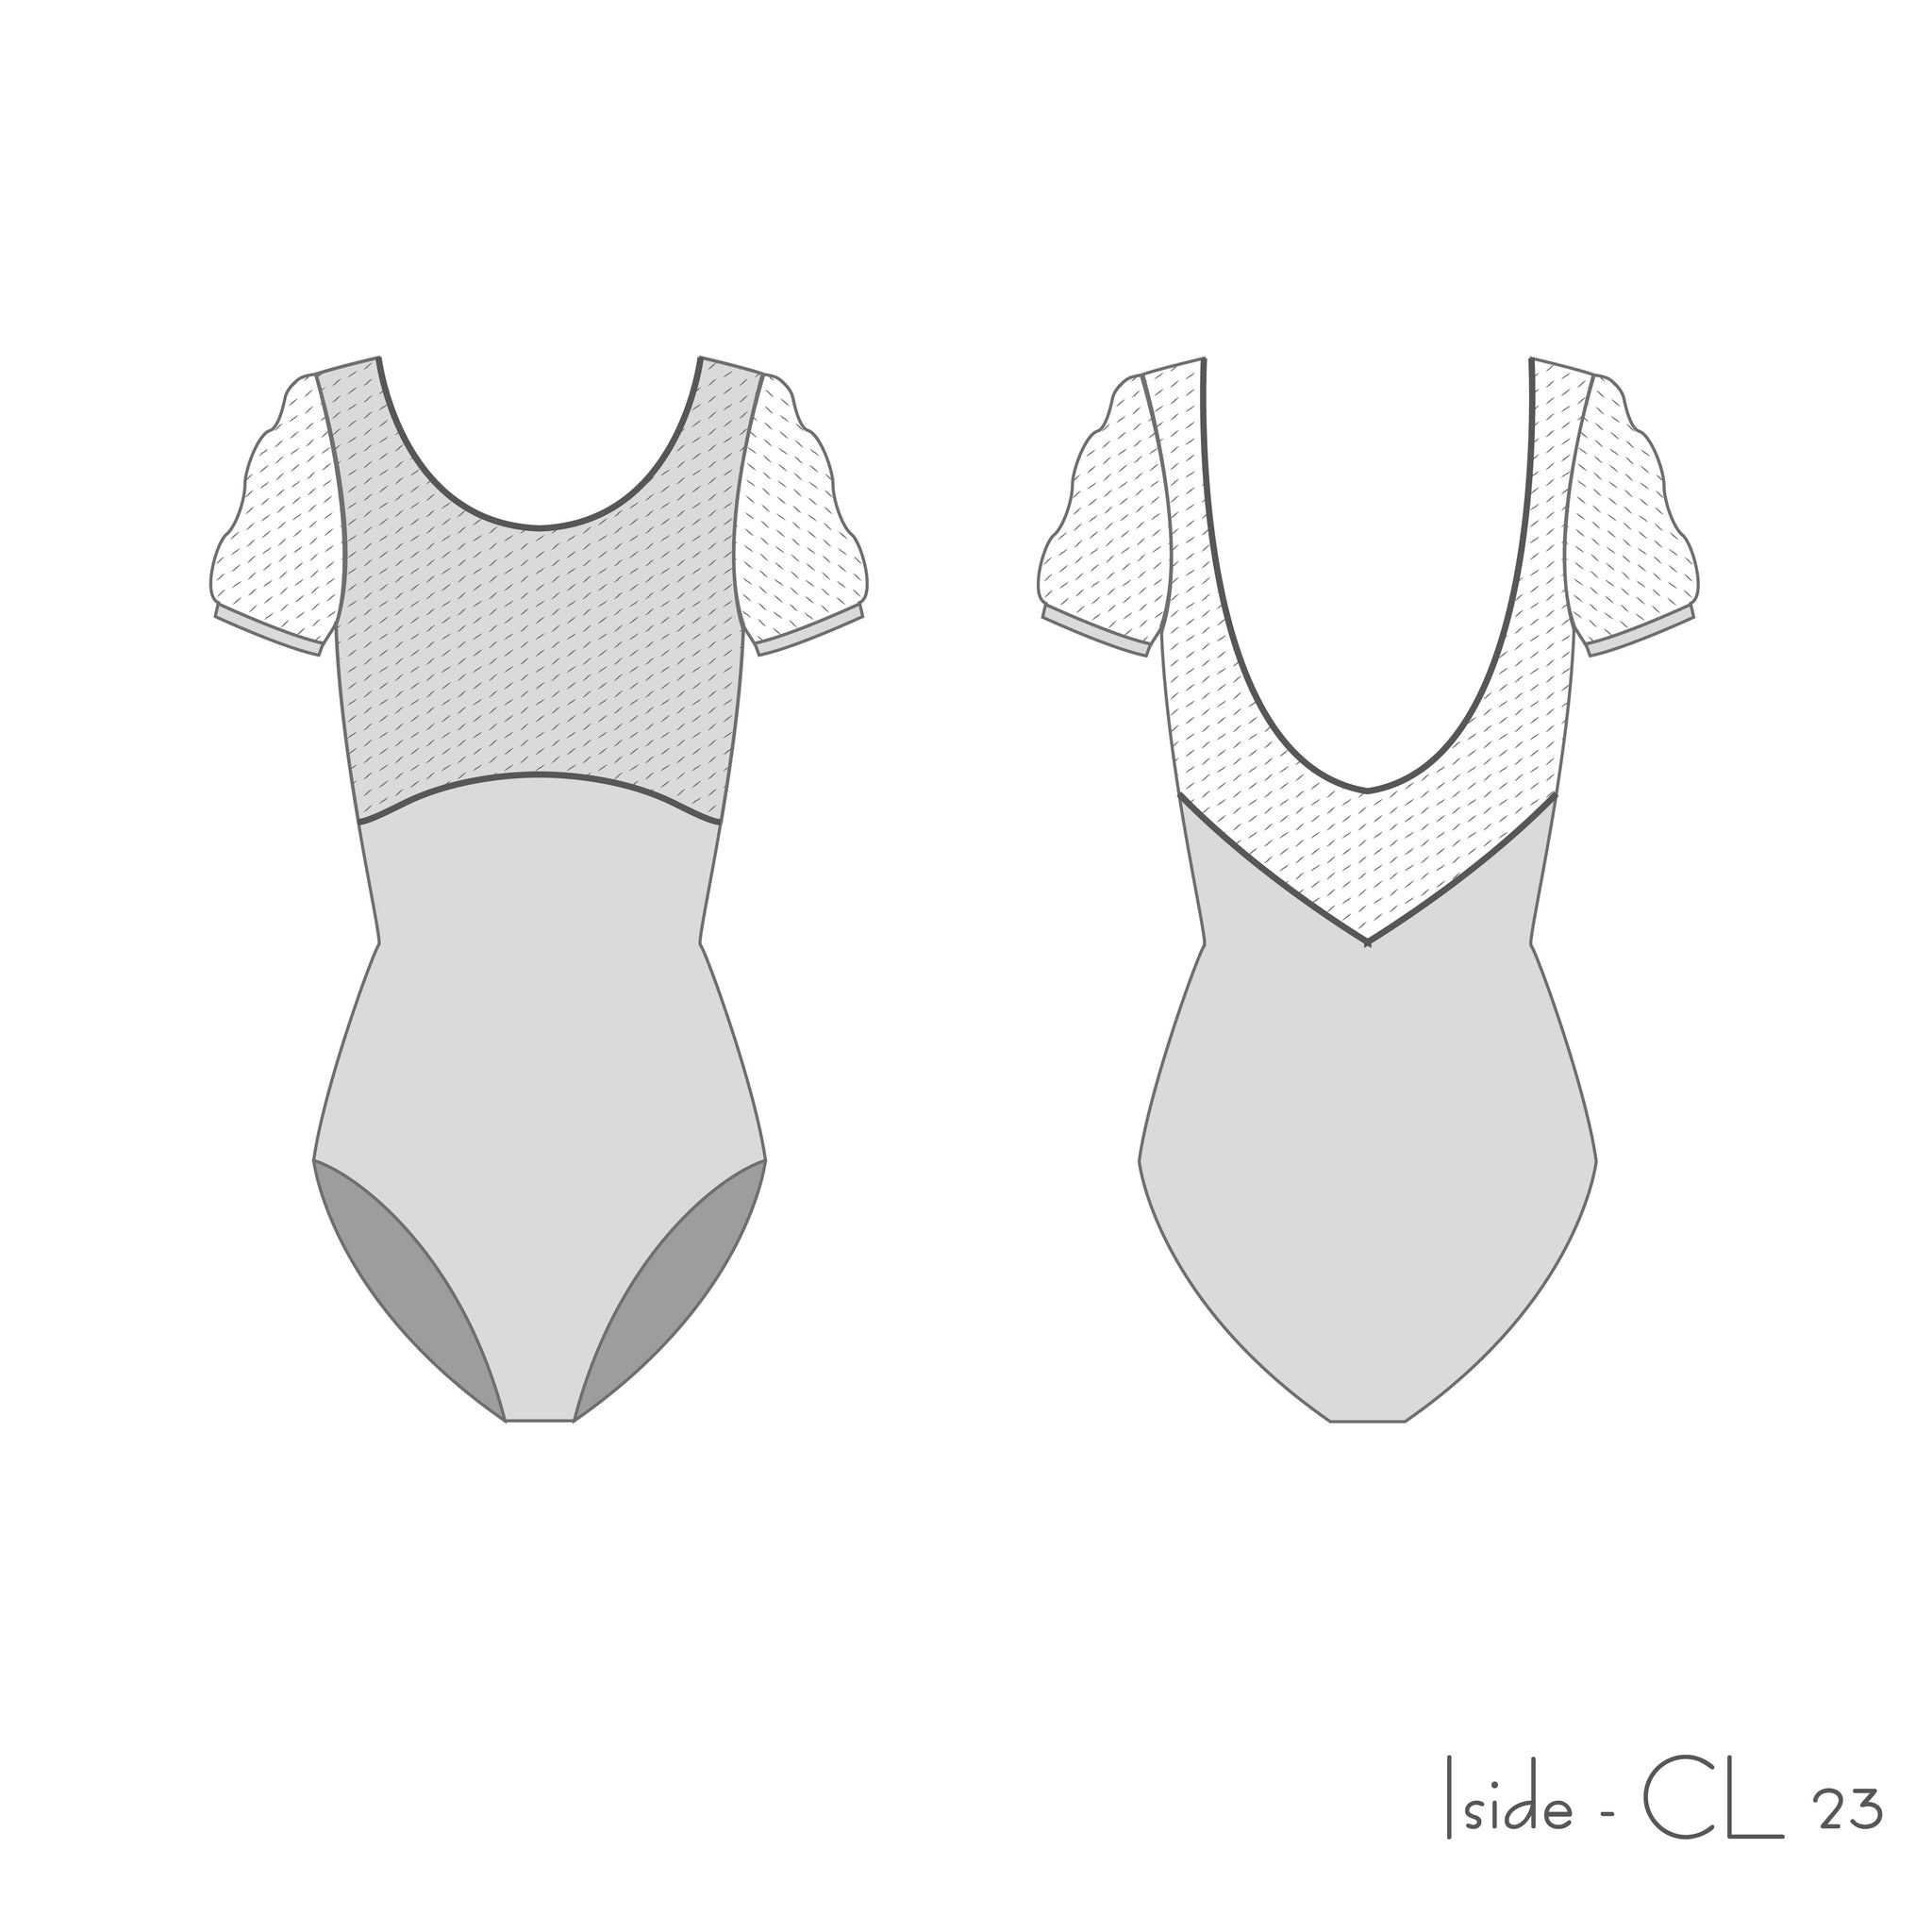 Iside CL Custom 23